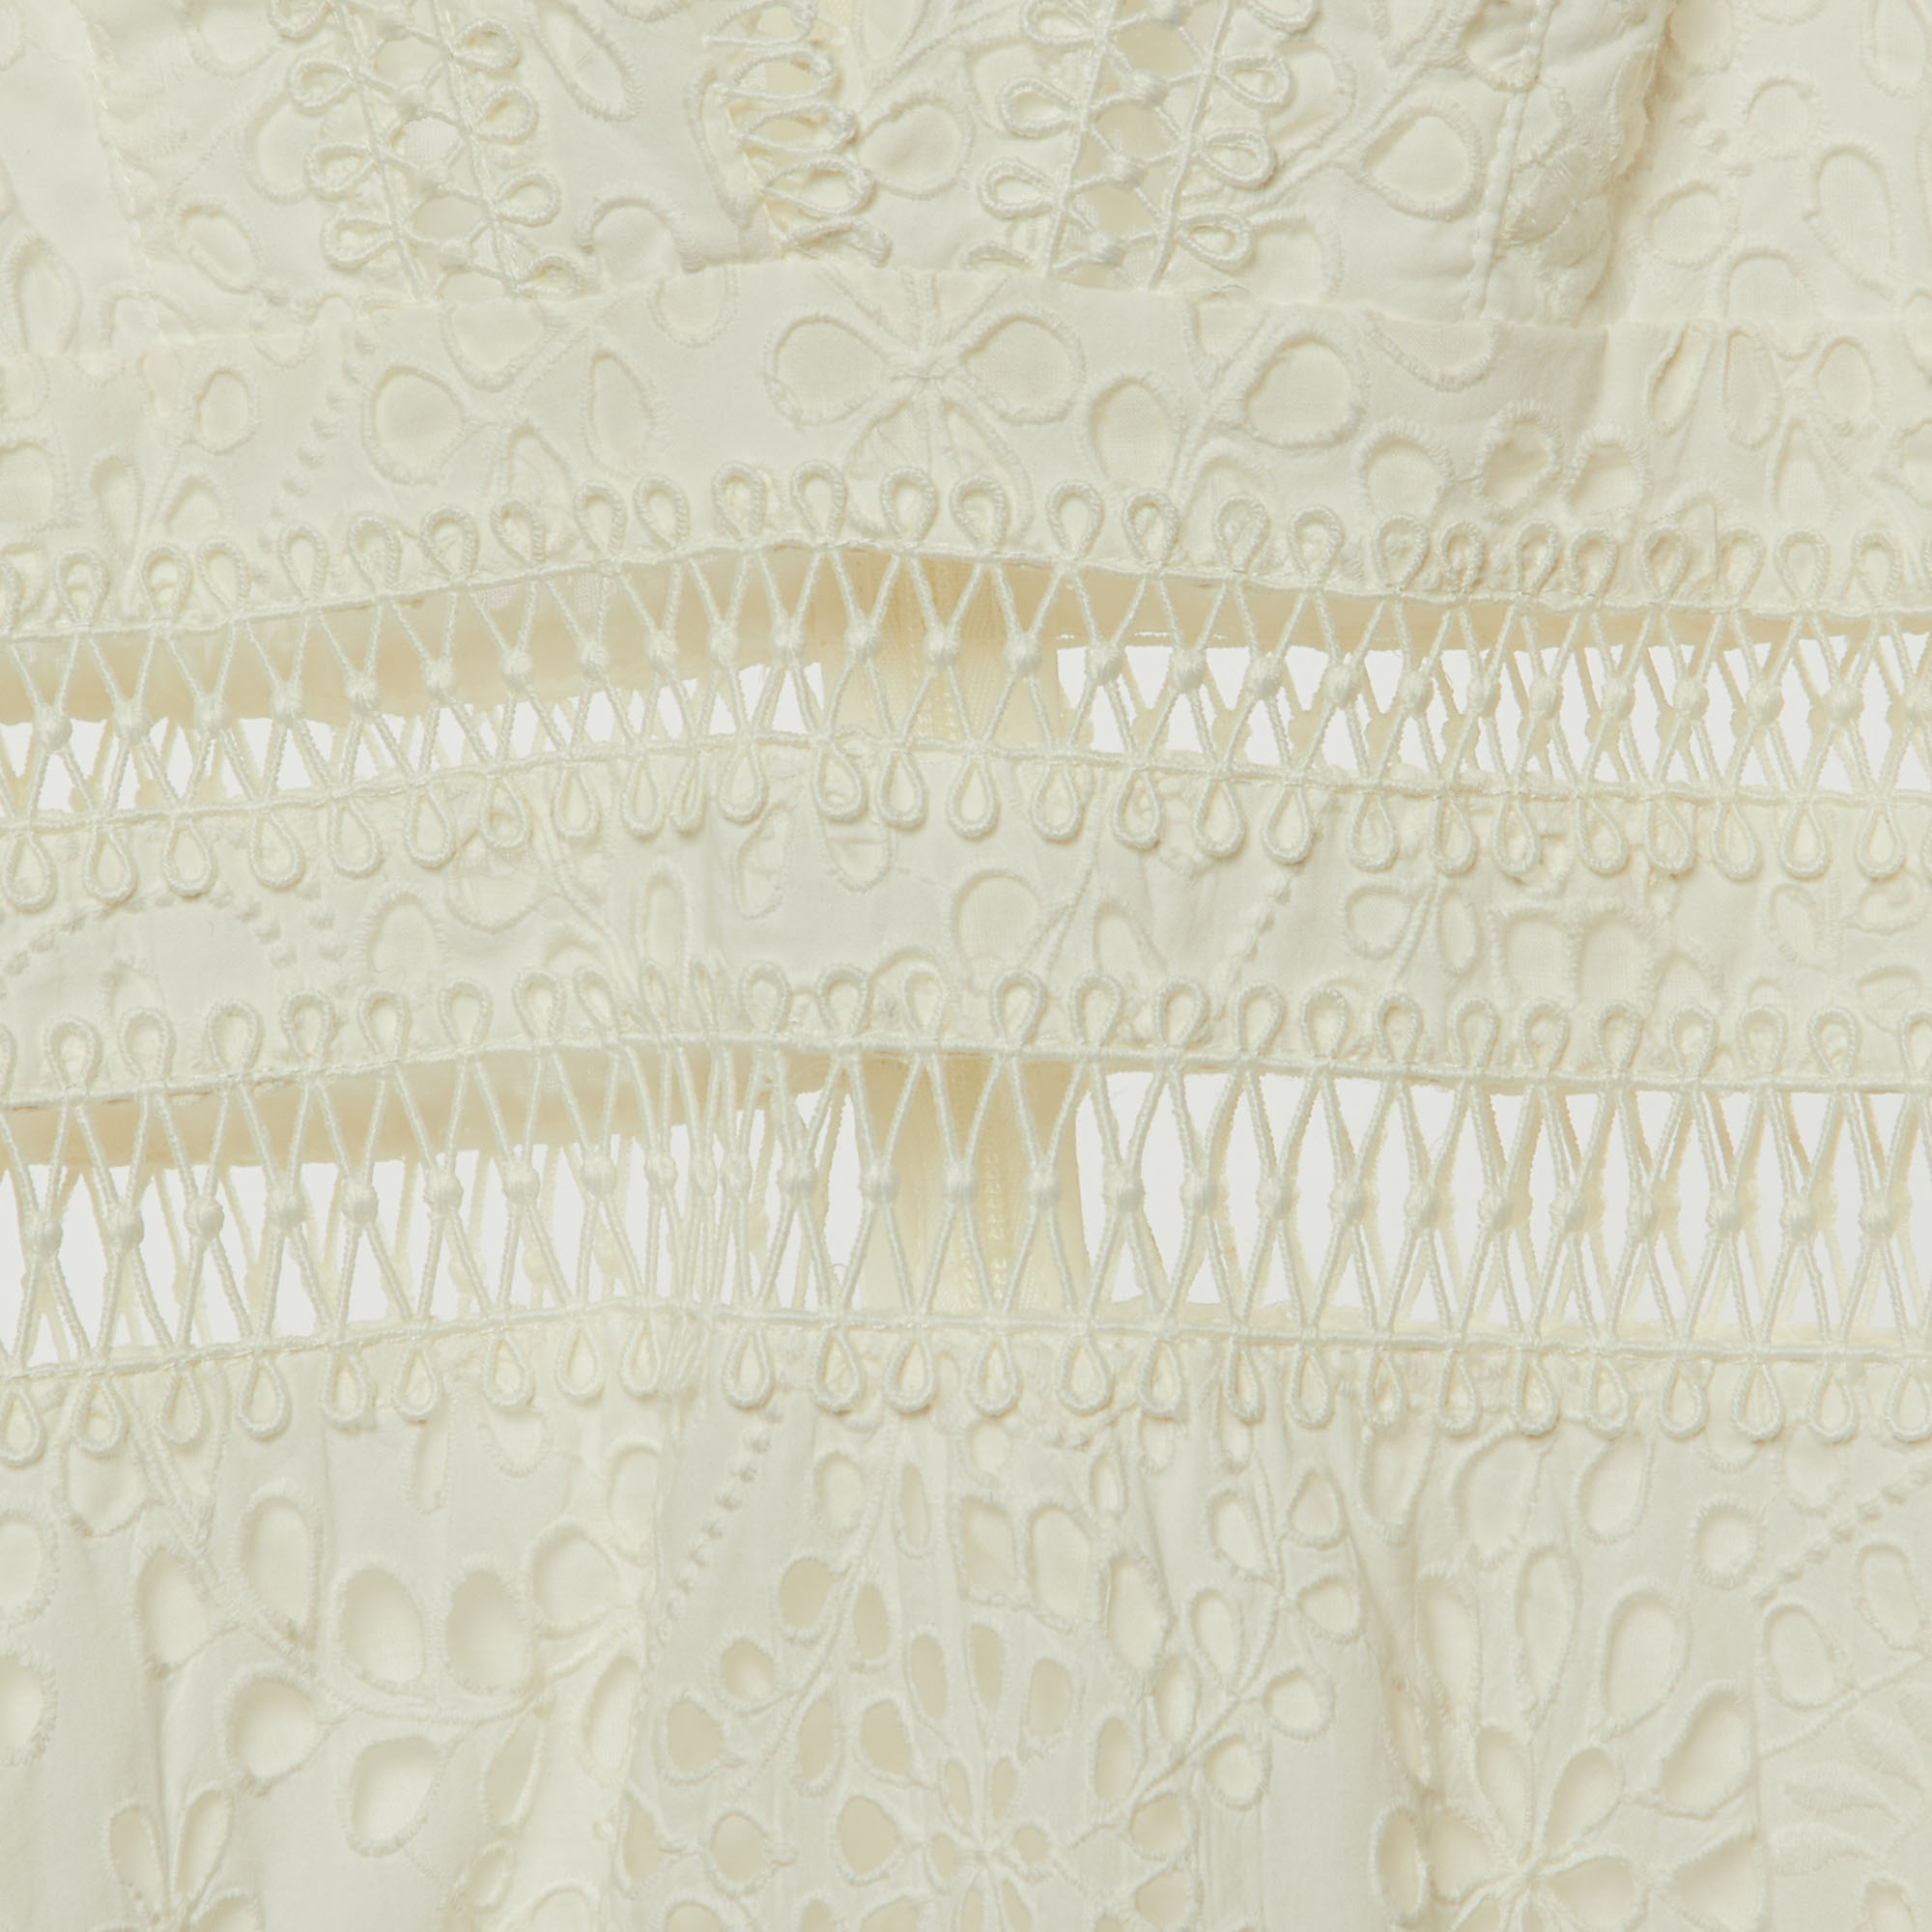 Zimmermann White Cutwork & Lace Lovehorn Mini Dress S